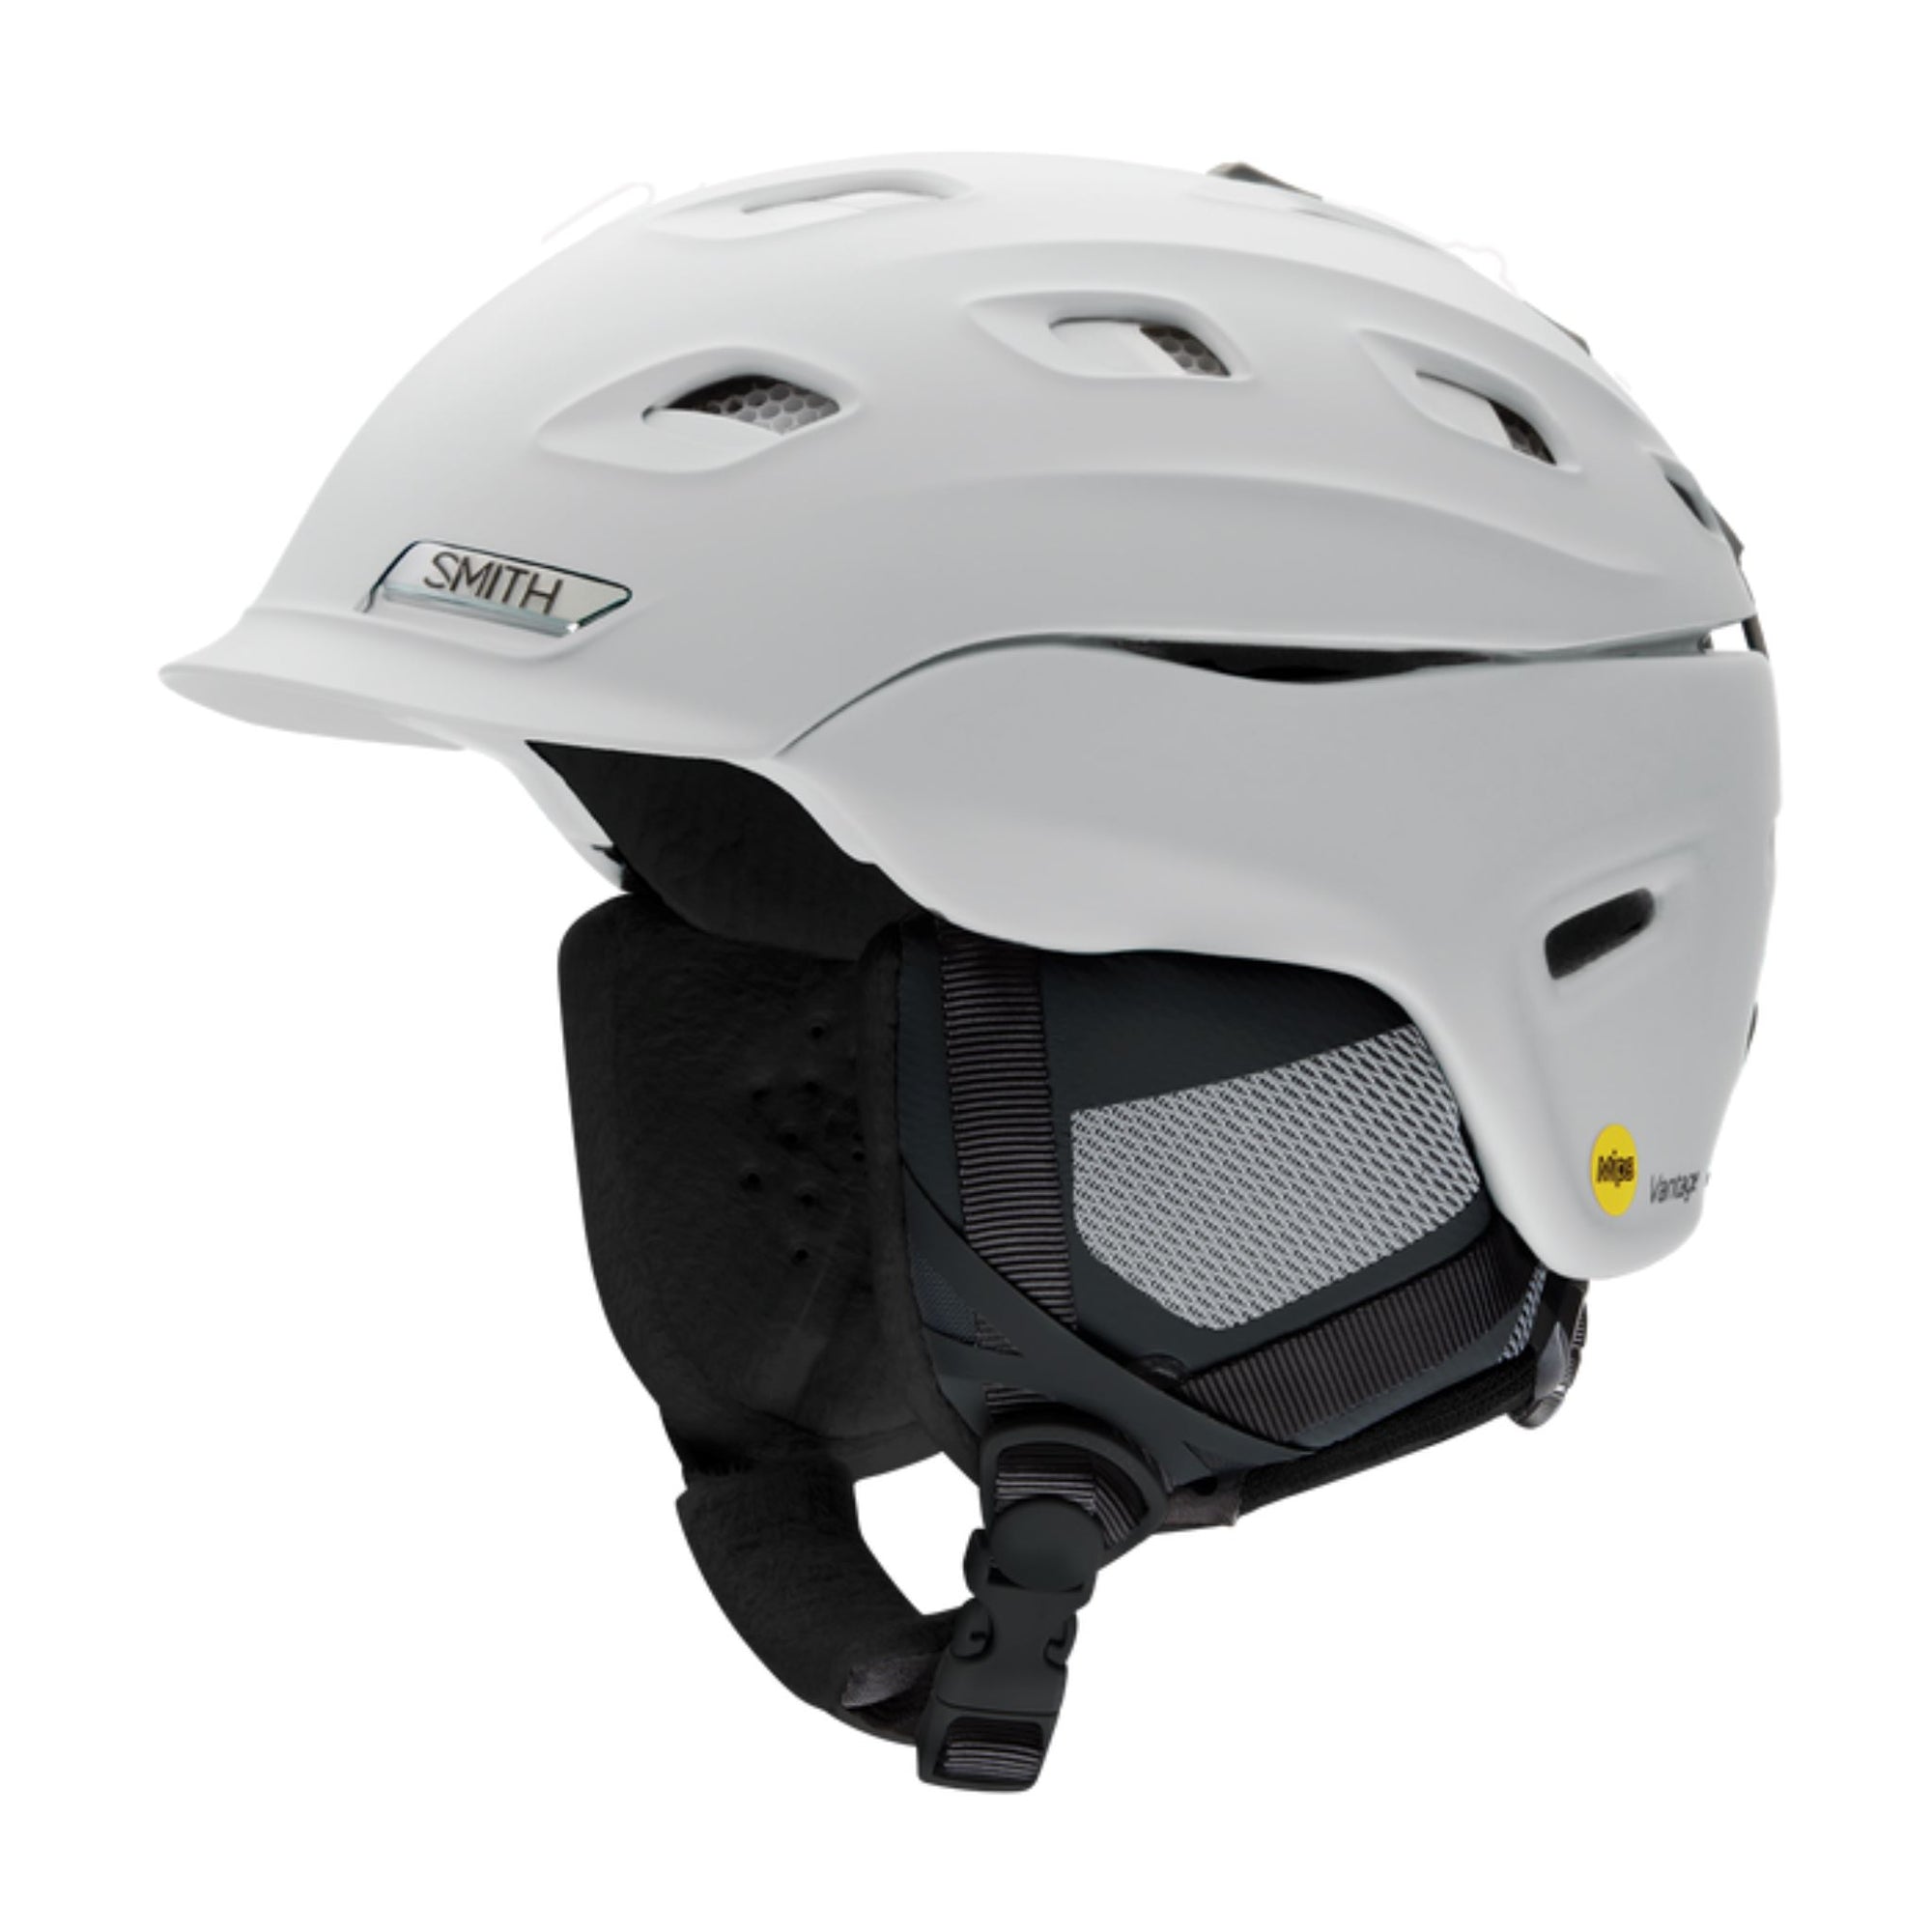 Womens Smith Vantage MIPS Helmet - Matte White Helmets Smith S - (51-55cm) 